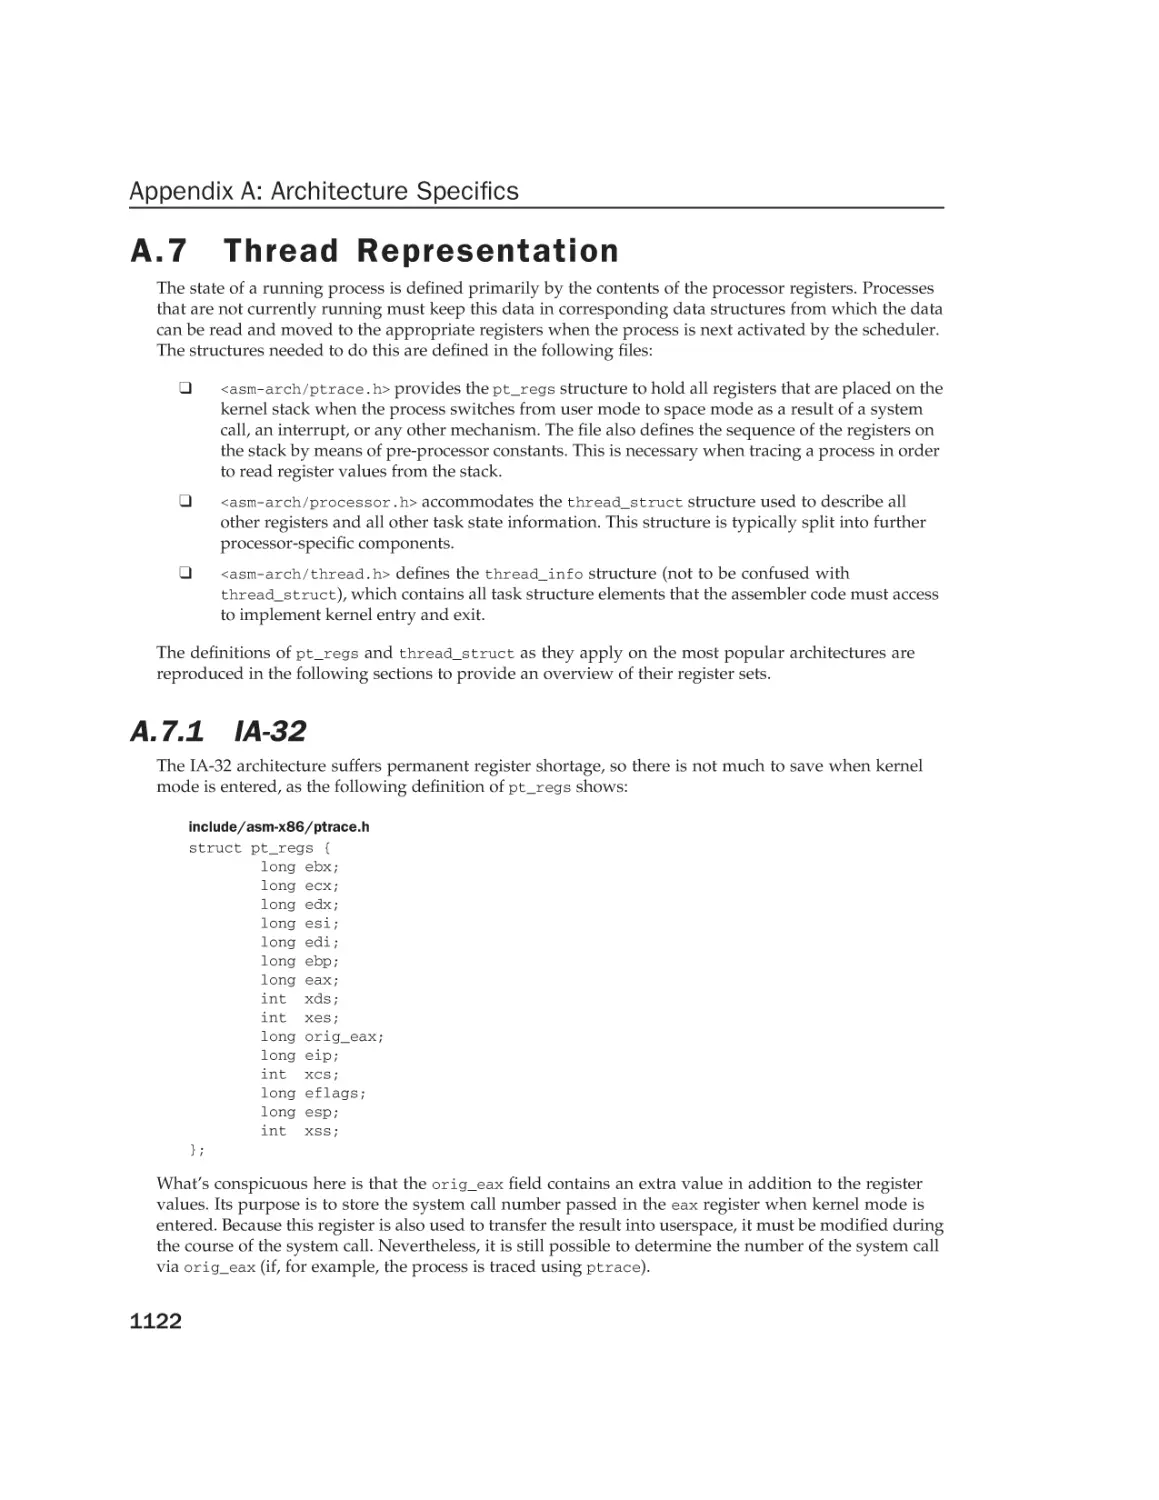 A.7 Thread Representation